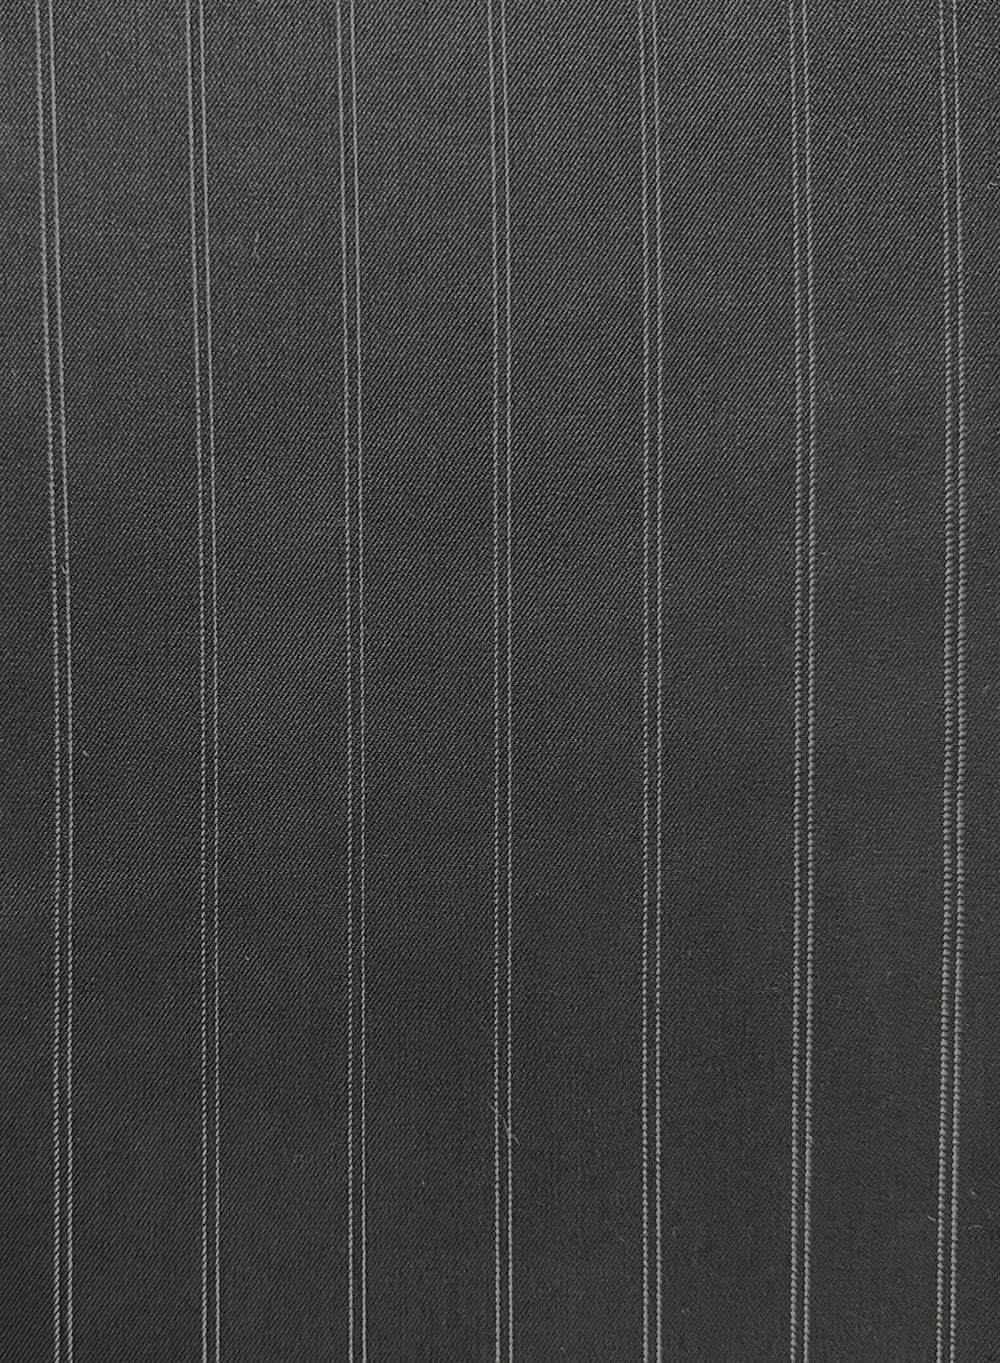 Esmaee Studio Tailored Pants | Black Pinstripe